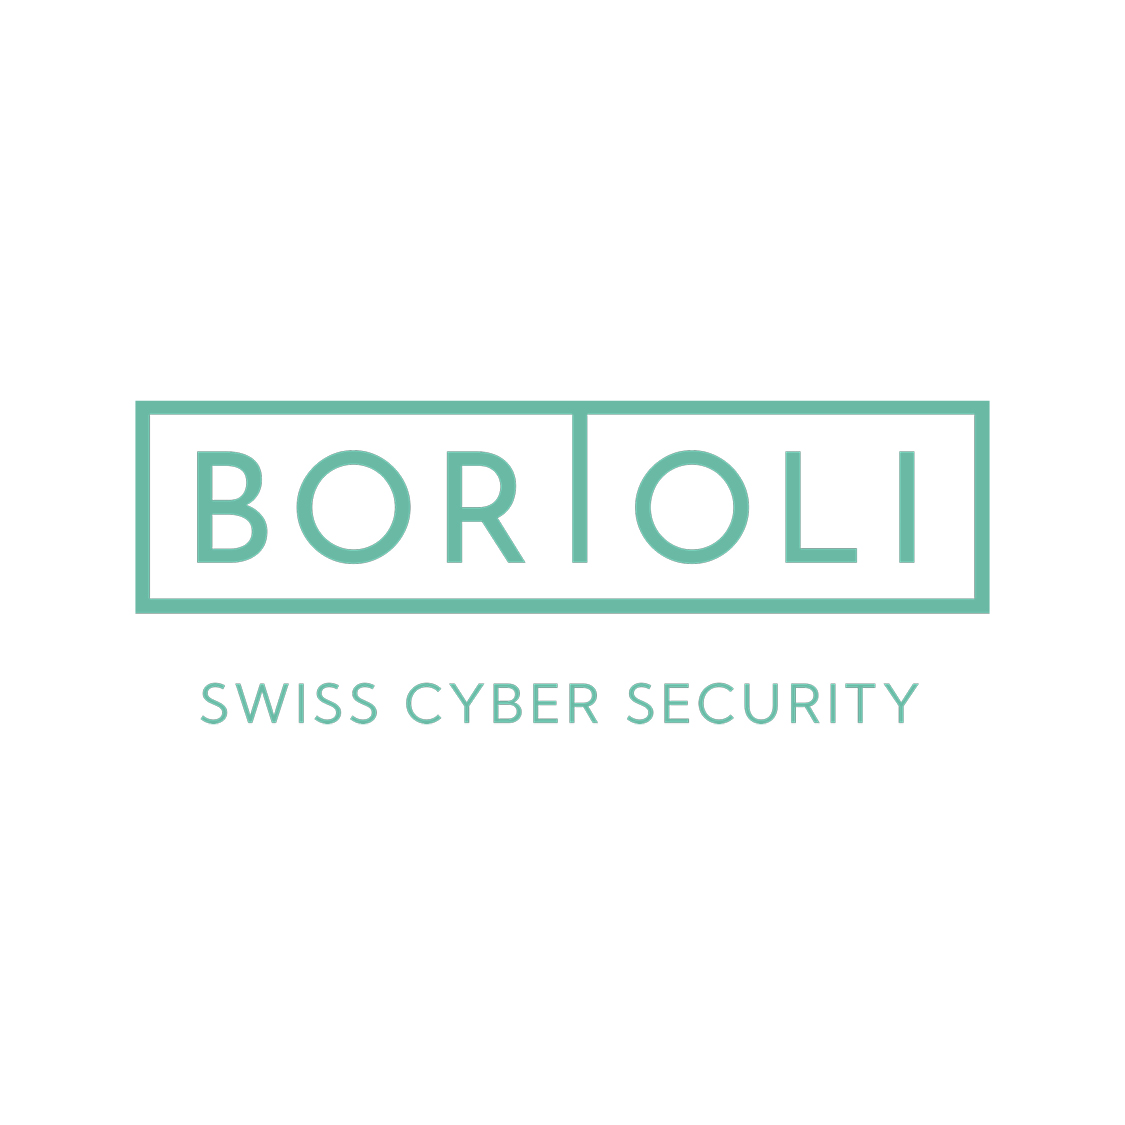 Bortoli Swiss Cyber Security